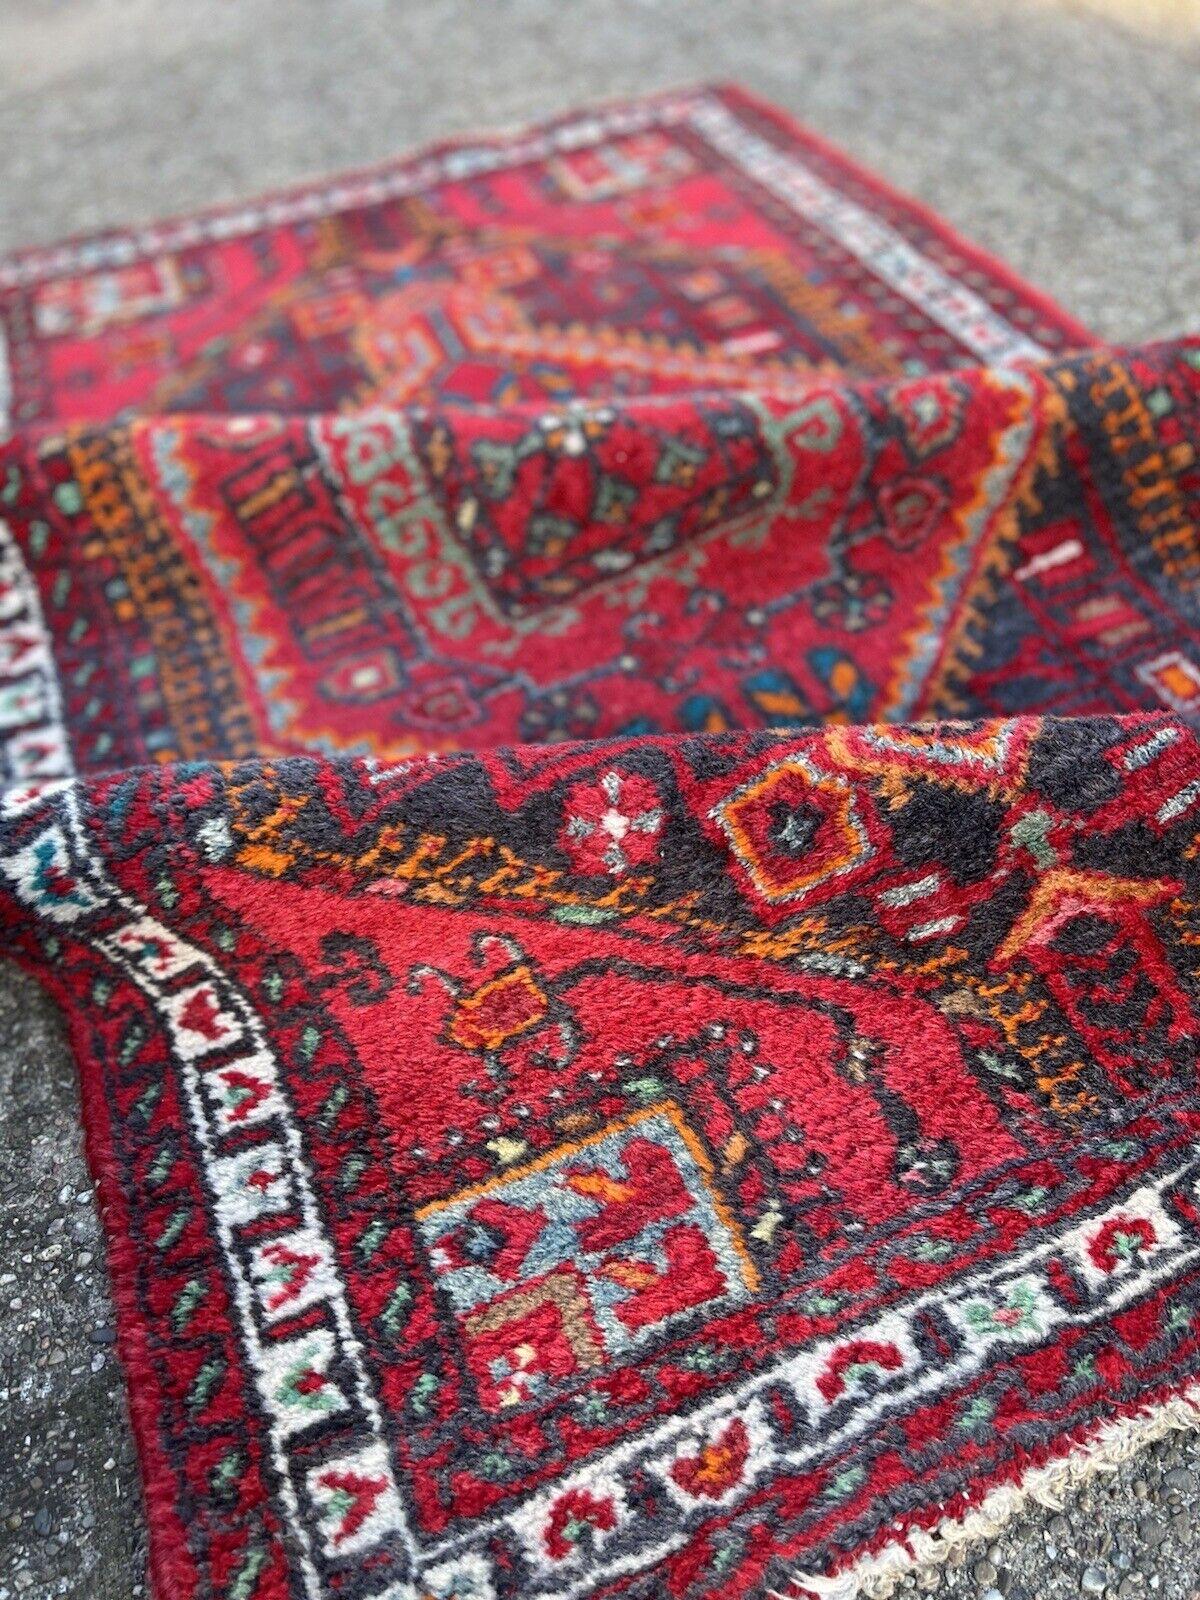 Handmade Vintage Persian Style Hamadan Rug 2.7' x 4.3', 1970s - 1S60 For Sale 5